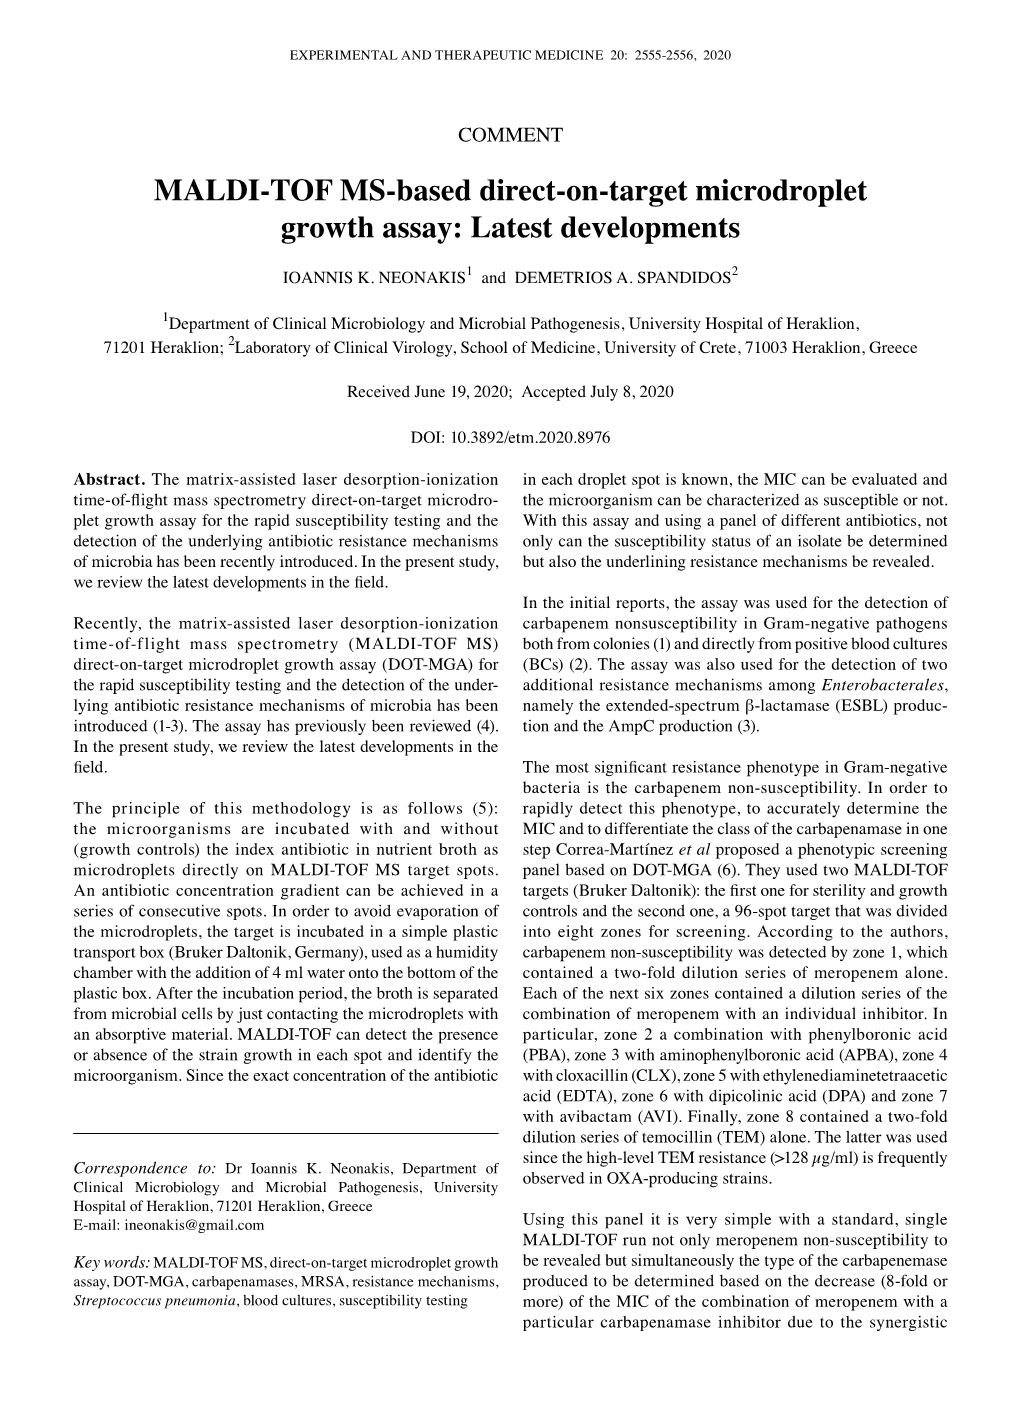 MALDI‑TOF MS‑Based Direct‑On‑Target Microdroplet Growth Assay: Latest Developments